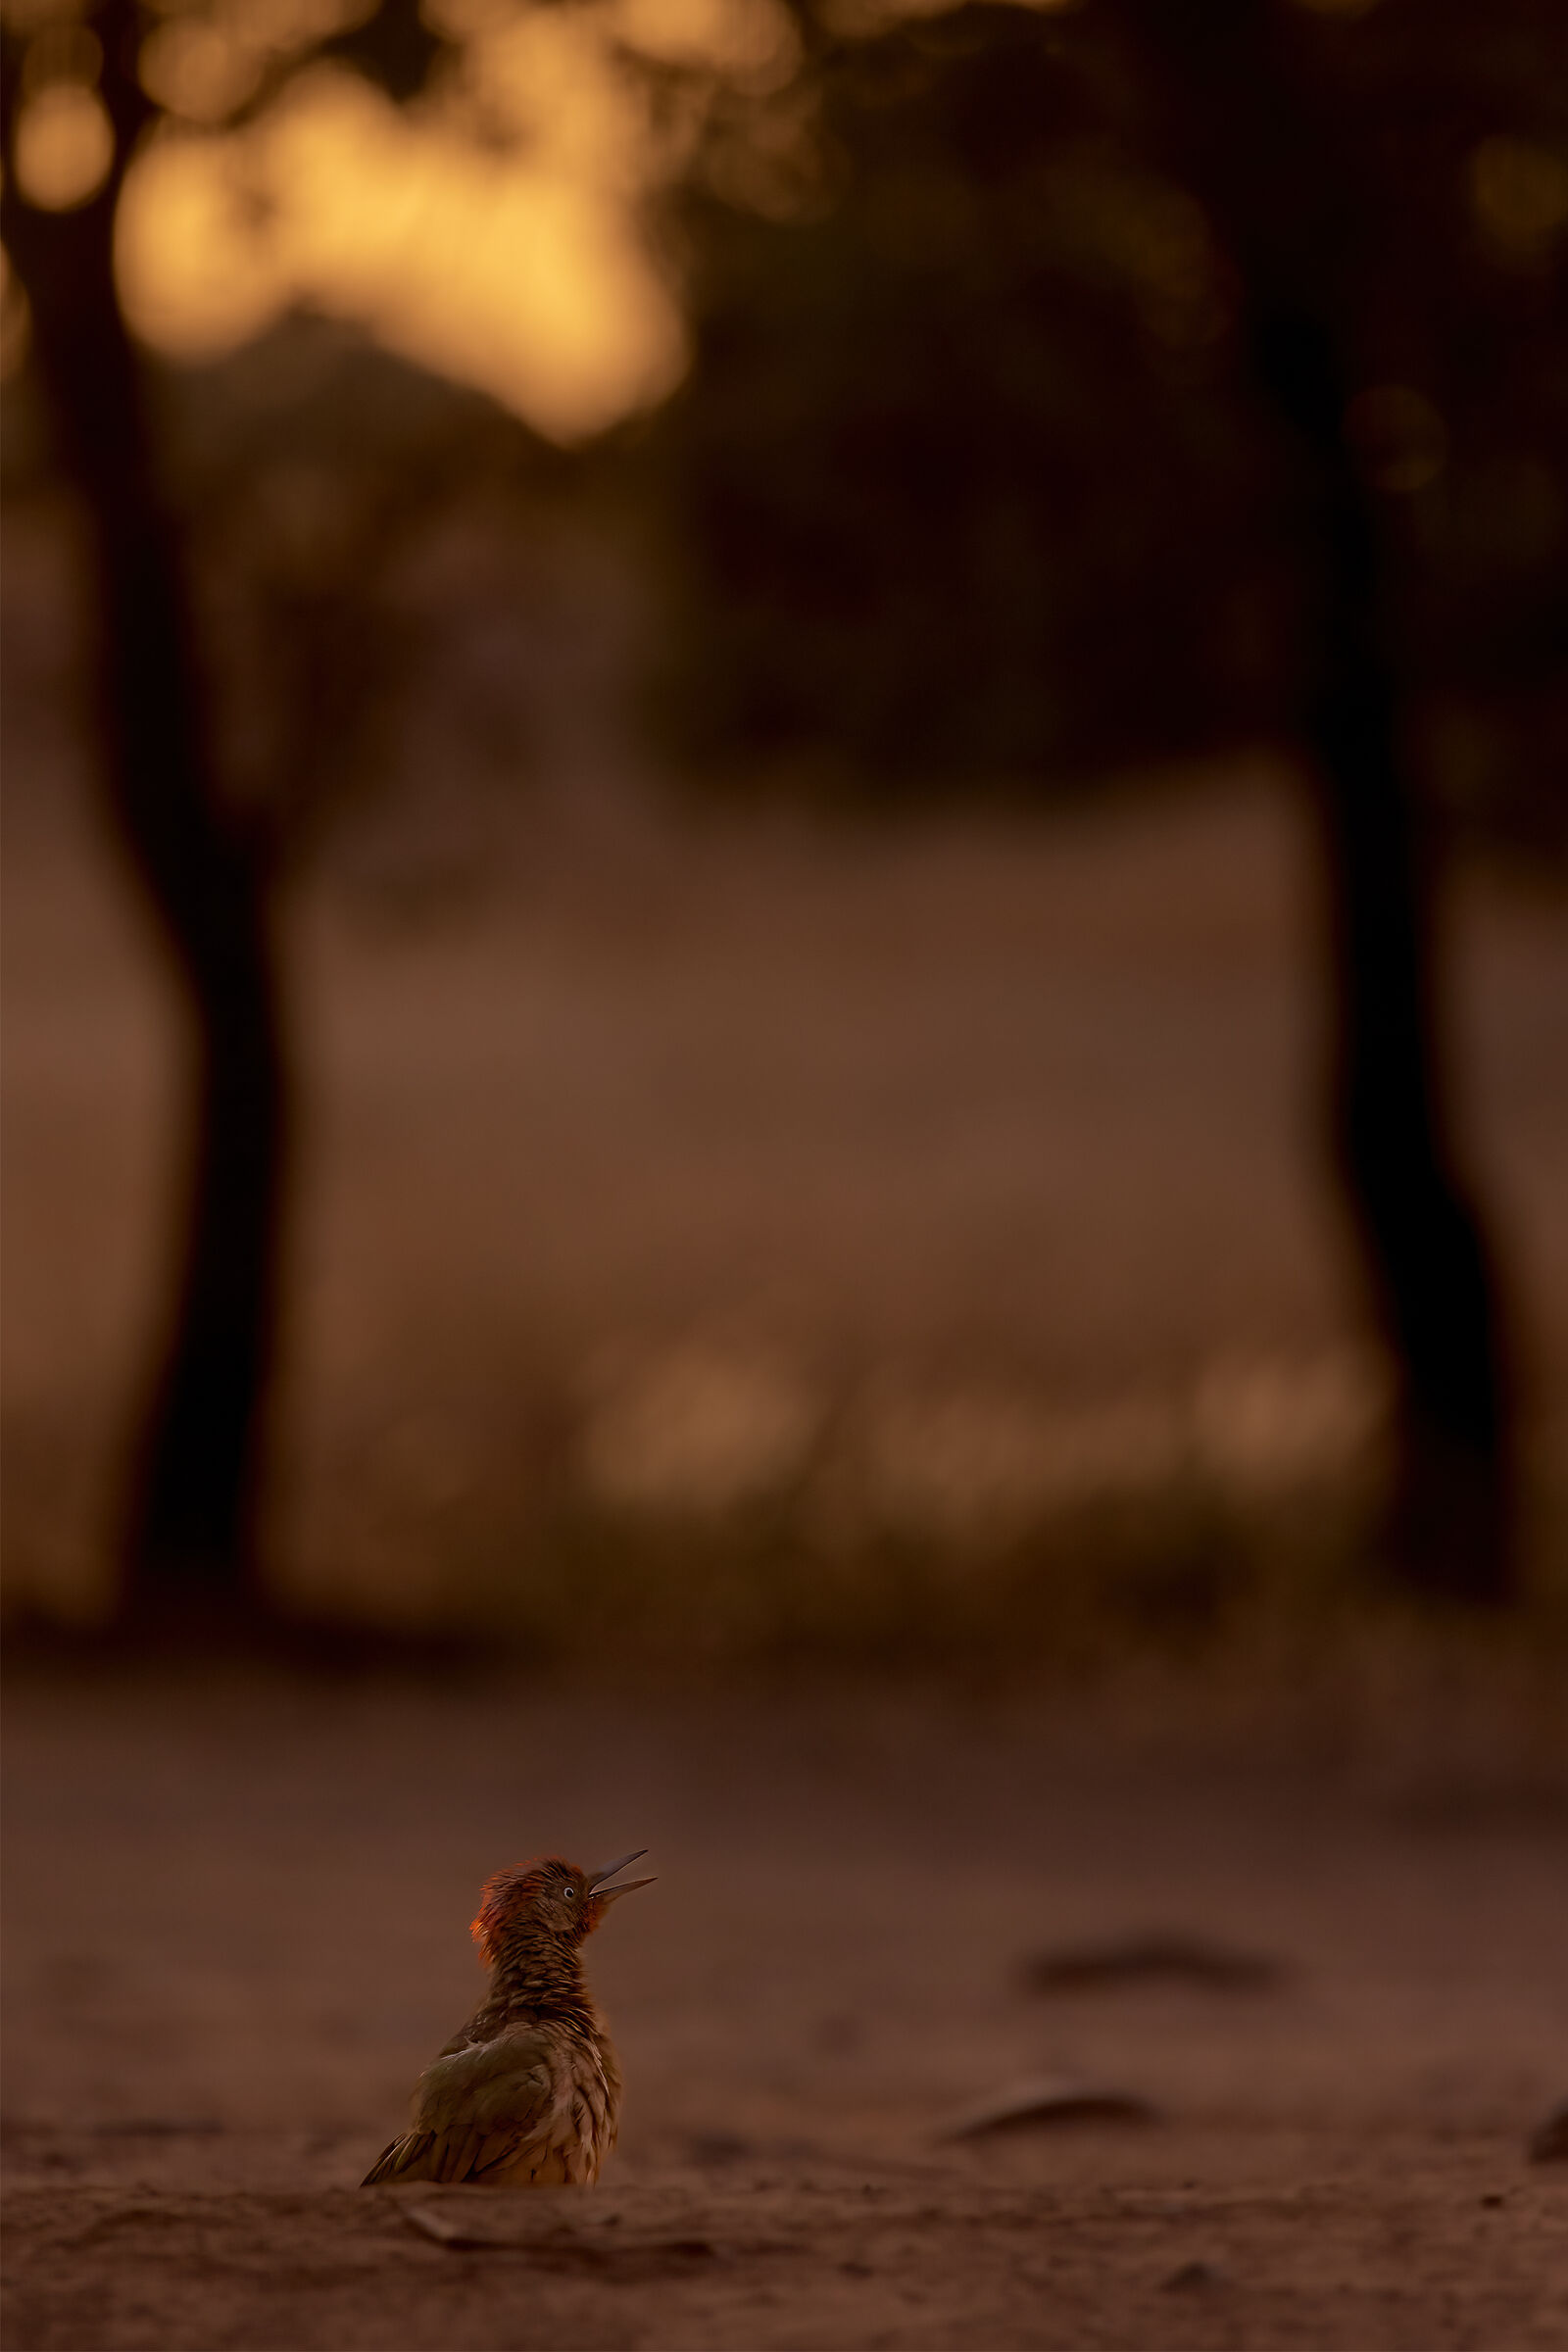 Green woodpecker at sunset...